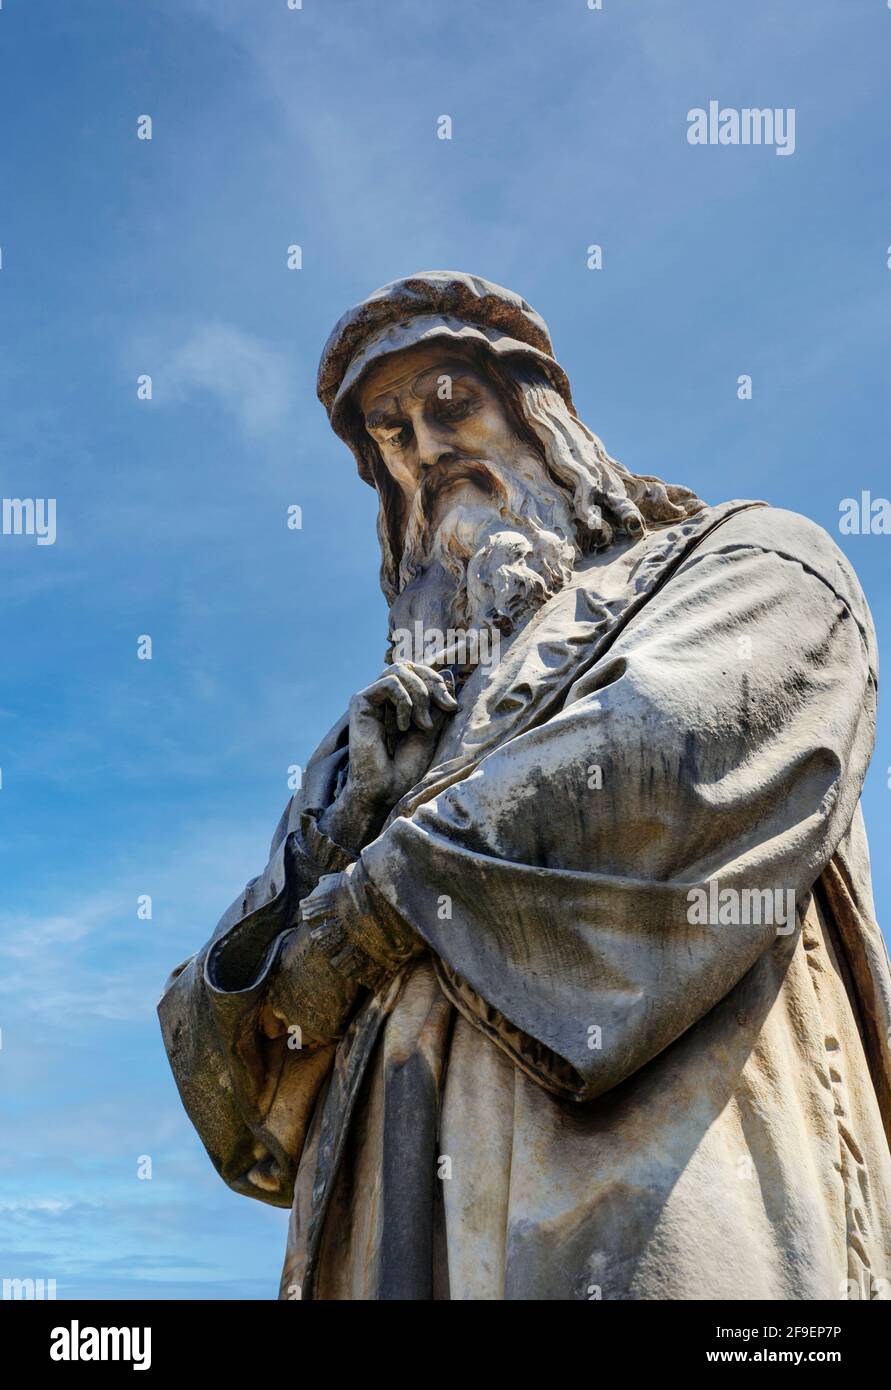 Mailand, Provinz Mailand, Lombardei, Italien. Statue auf der Piazza della Scala des Künstlers Leonardo da Vinci, 1452-1519, von Pietro Magni, 1817-1877. Stockfoto